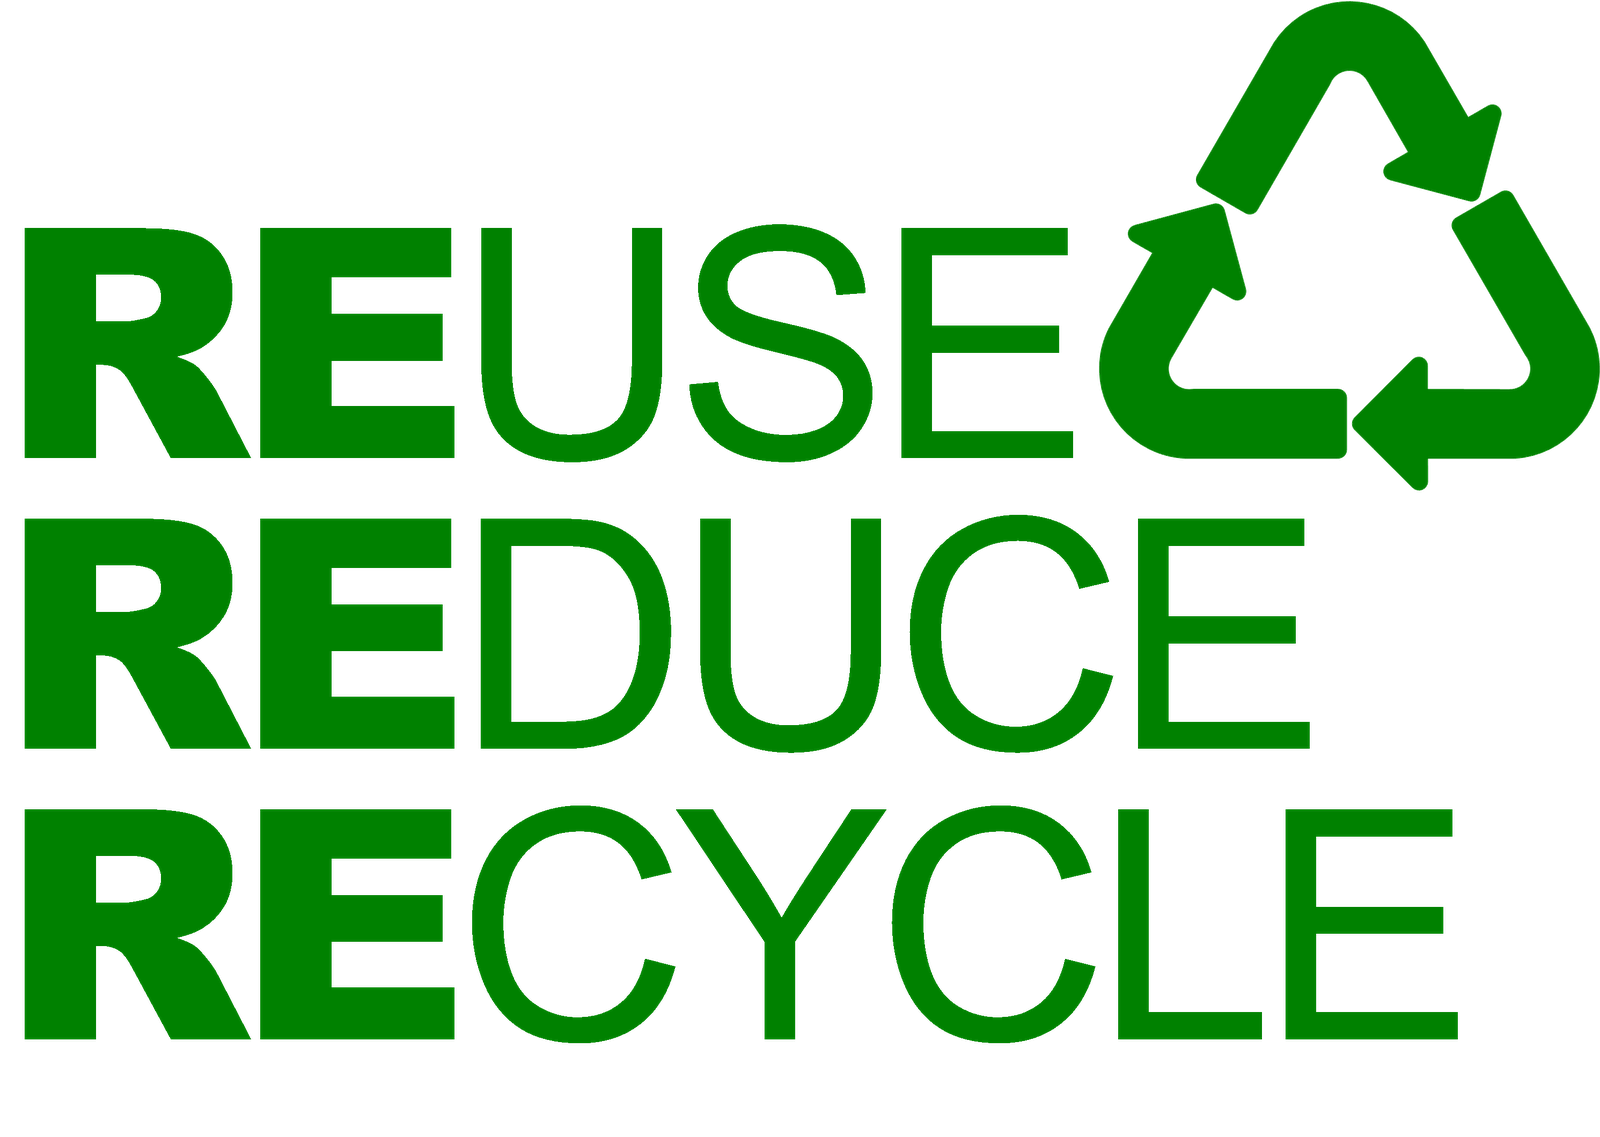 GREEN ECO RECYCLE SYMBOL VECTOR Logo photo - 1